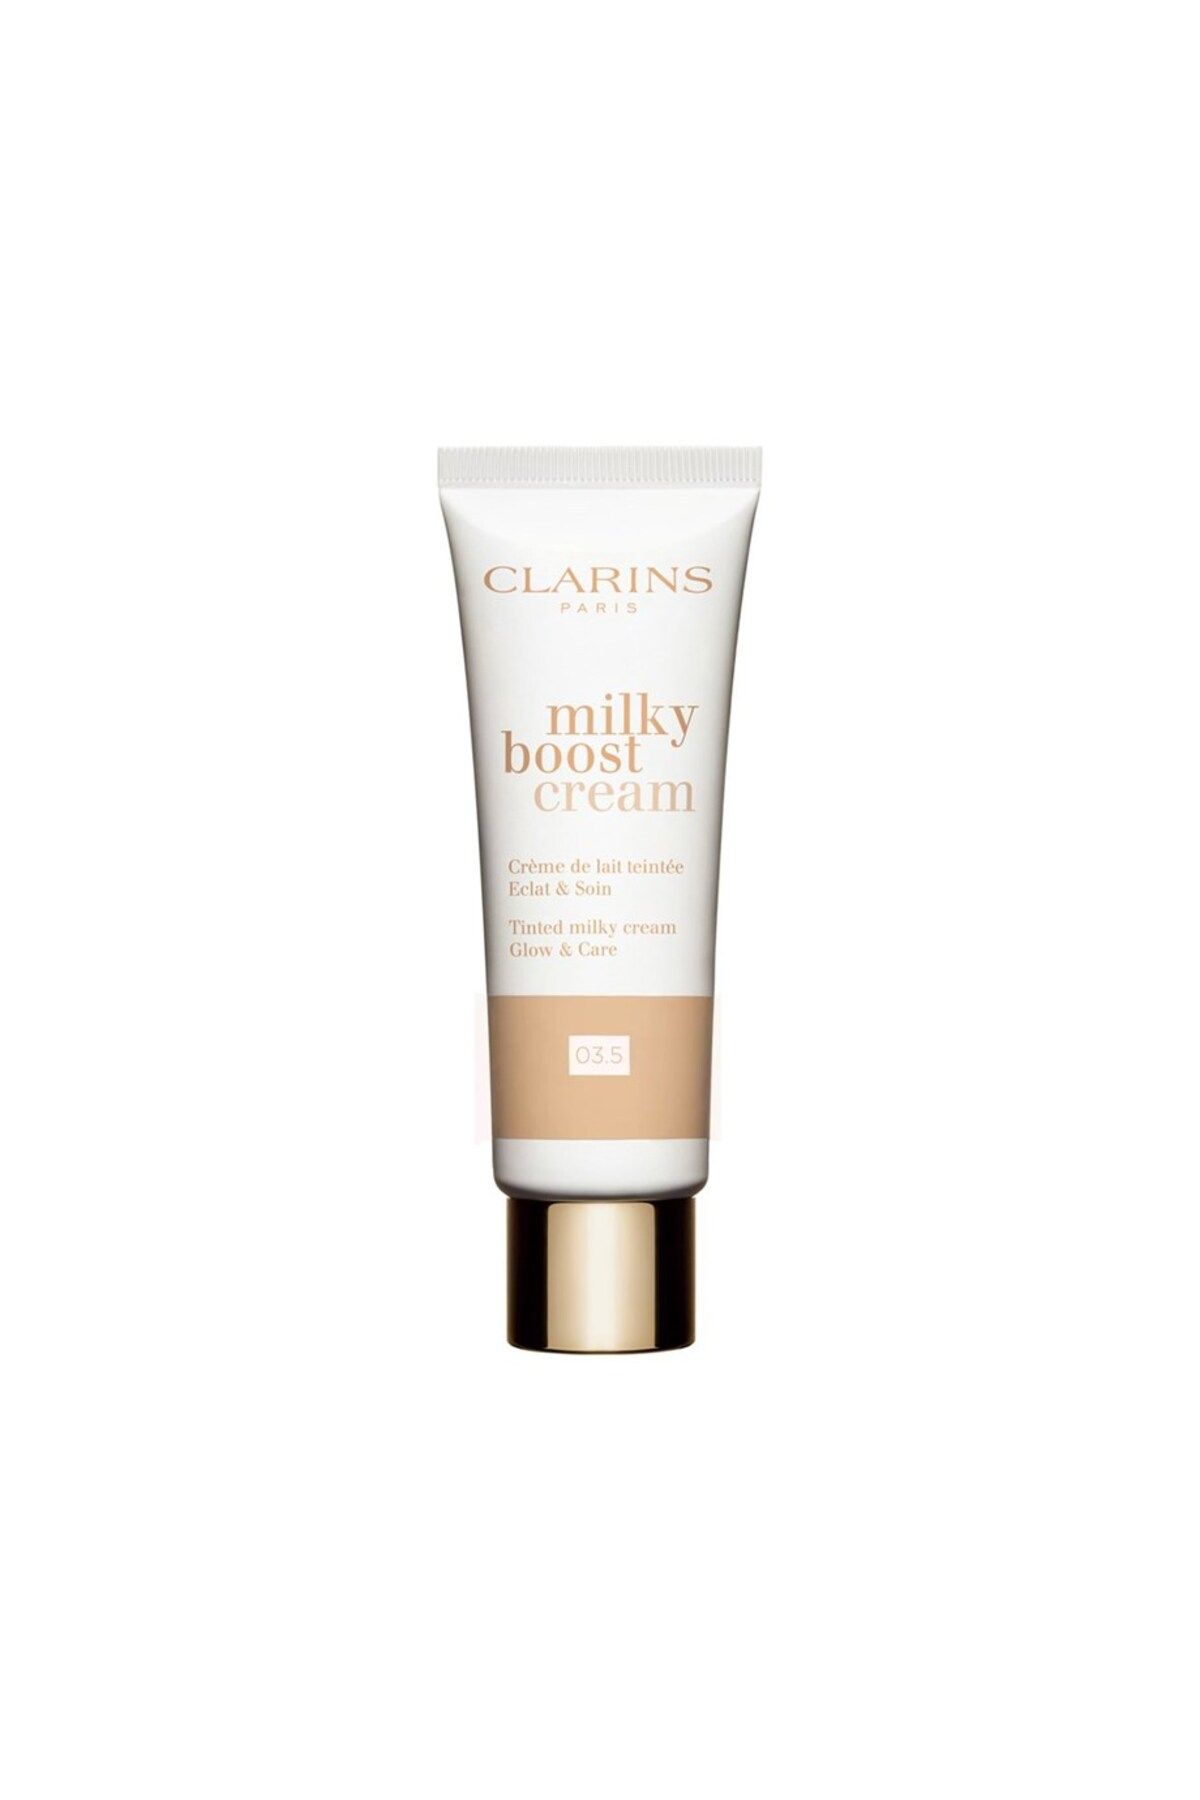 Clarins Milky Boost Cream Tinted Milky Cream 03.5  45 ml BB Krem